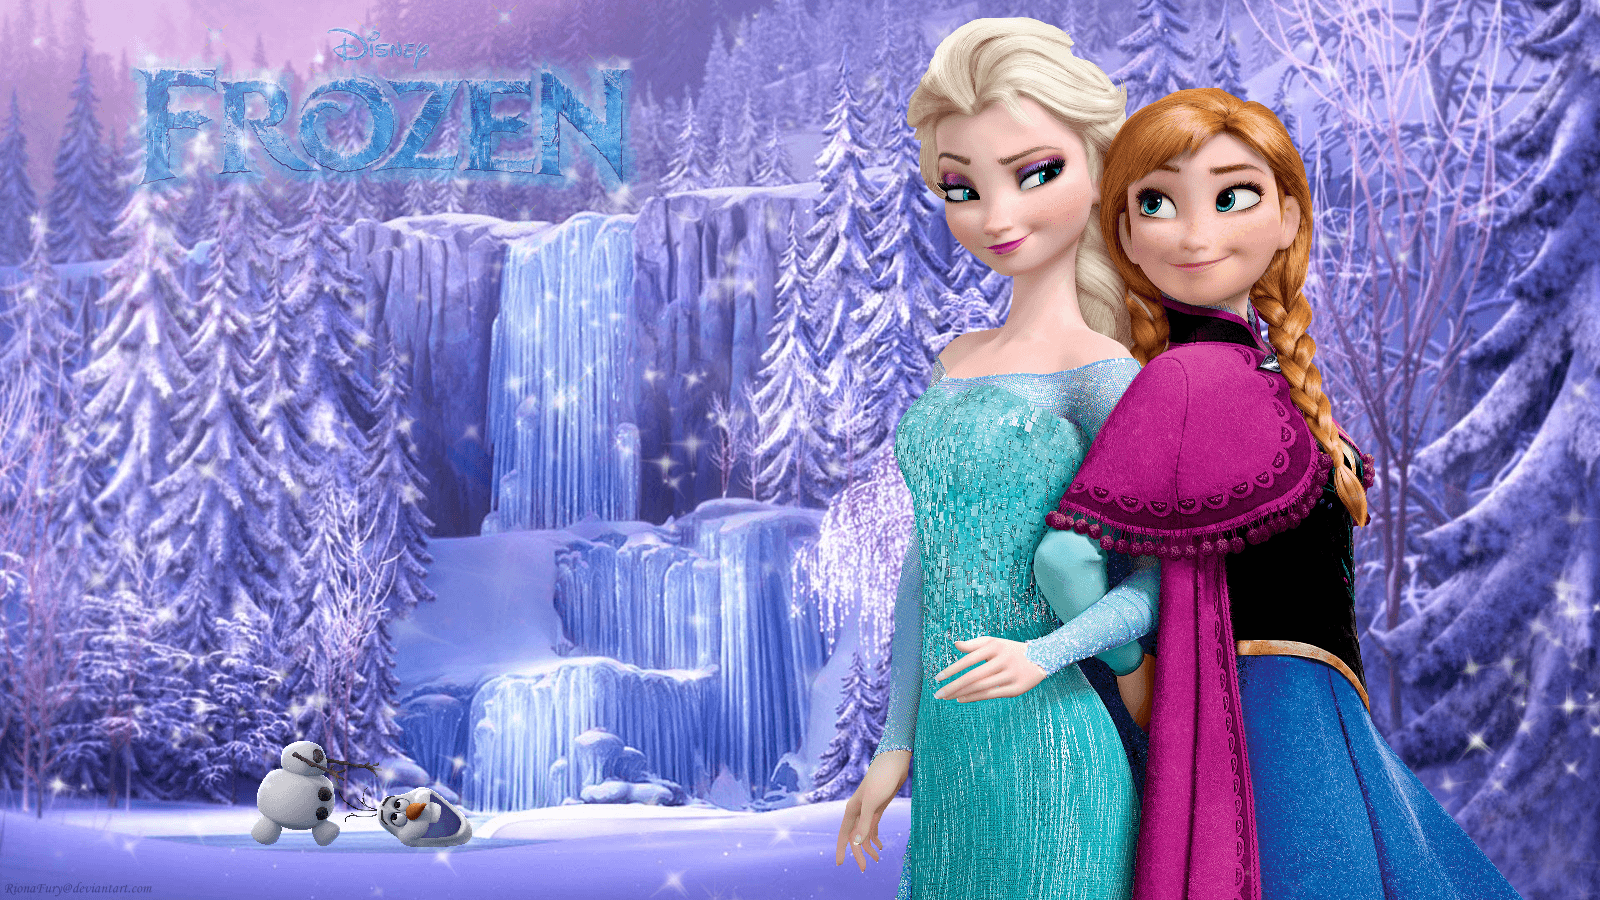 Disney Princess Wallpaper: Frozen Sisters. Frozen image, Frozen sisters, Frozen wallpaper